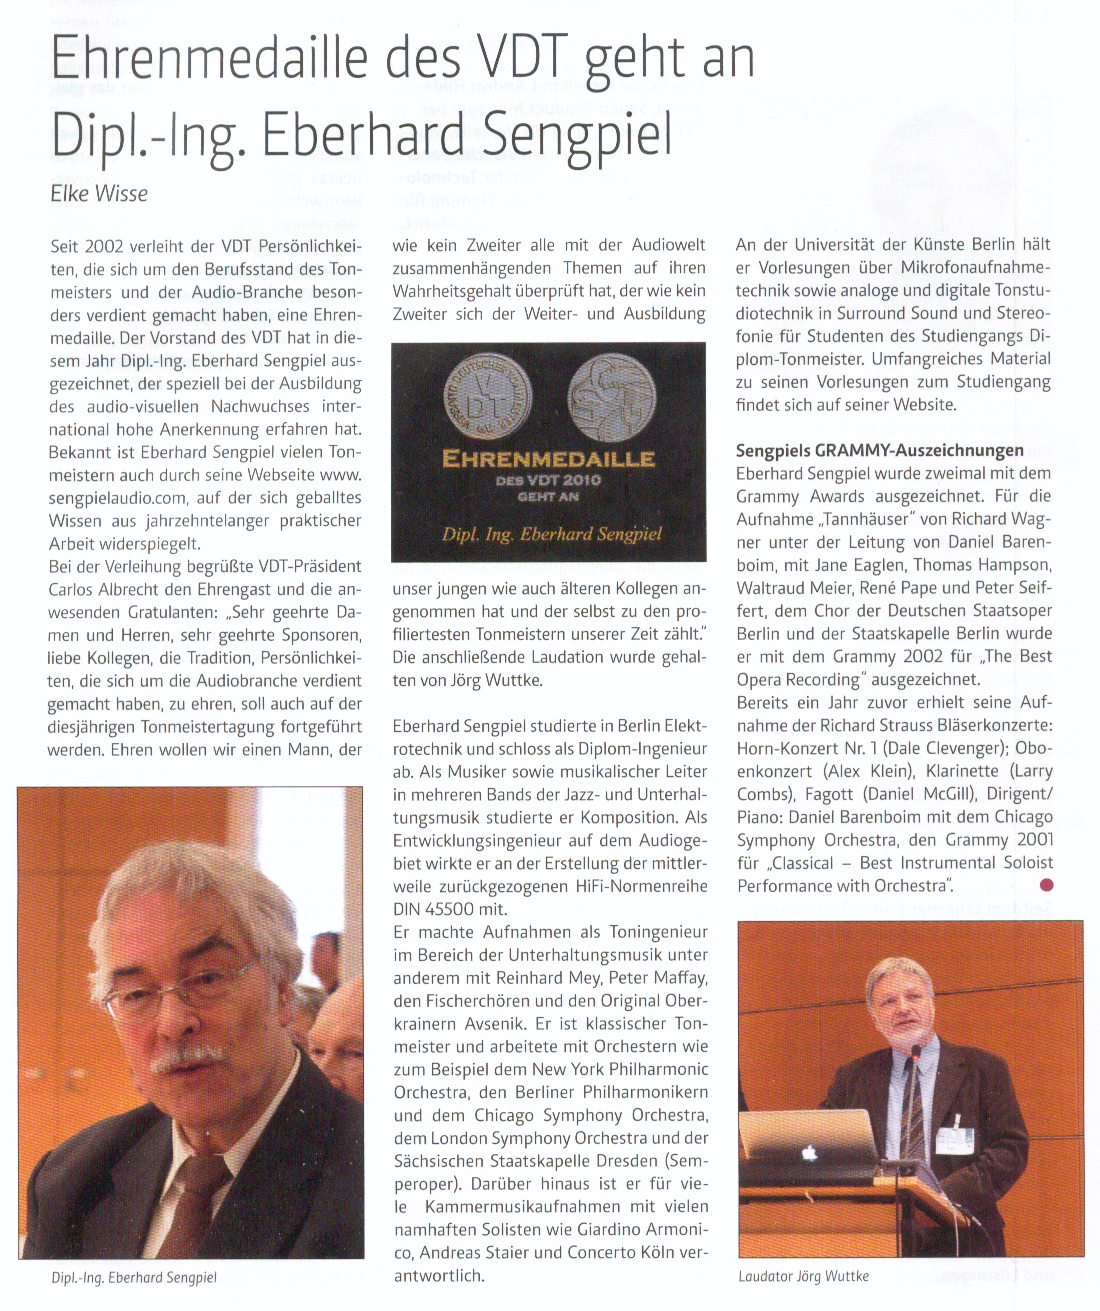 VDT-Ehrenmedaille Eberhard Sengpiel - sengpielaudio